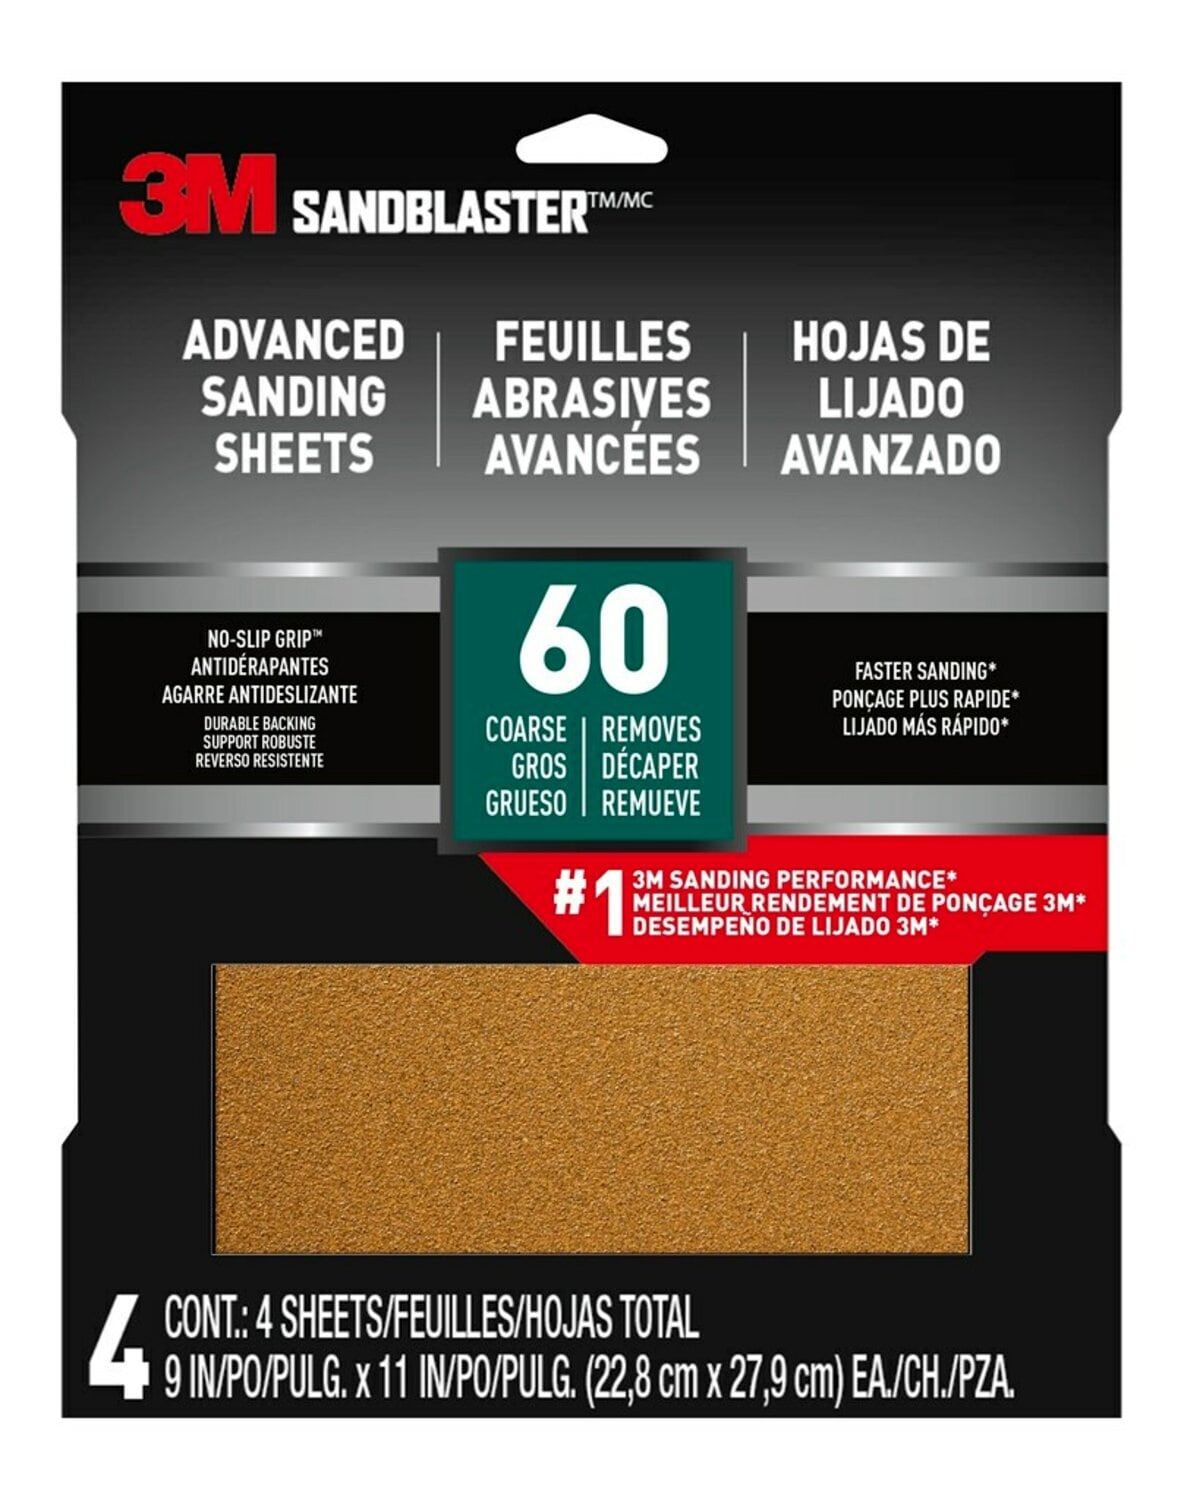 7100183446 - 3M SandBlaster ADVANCED SANDING Sanding Sheets w/ NO-SLIP GRIP,
20060-G-4 ,60 grit, 9 in x 11 in, 4/pk